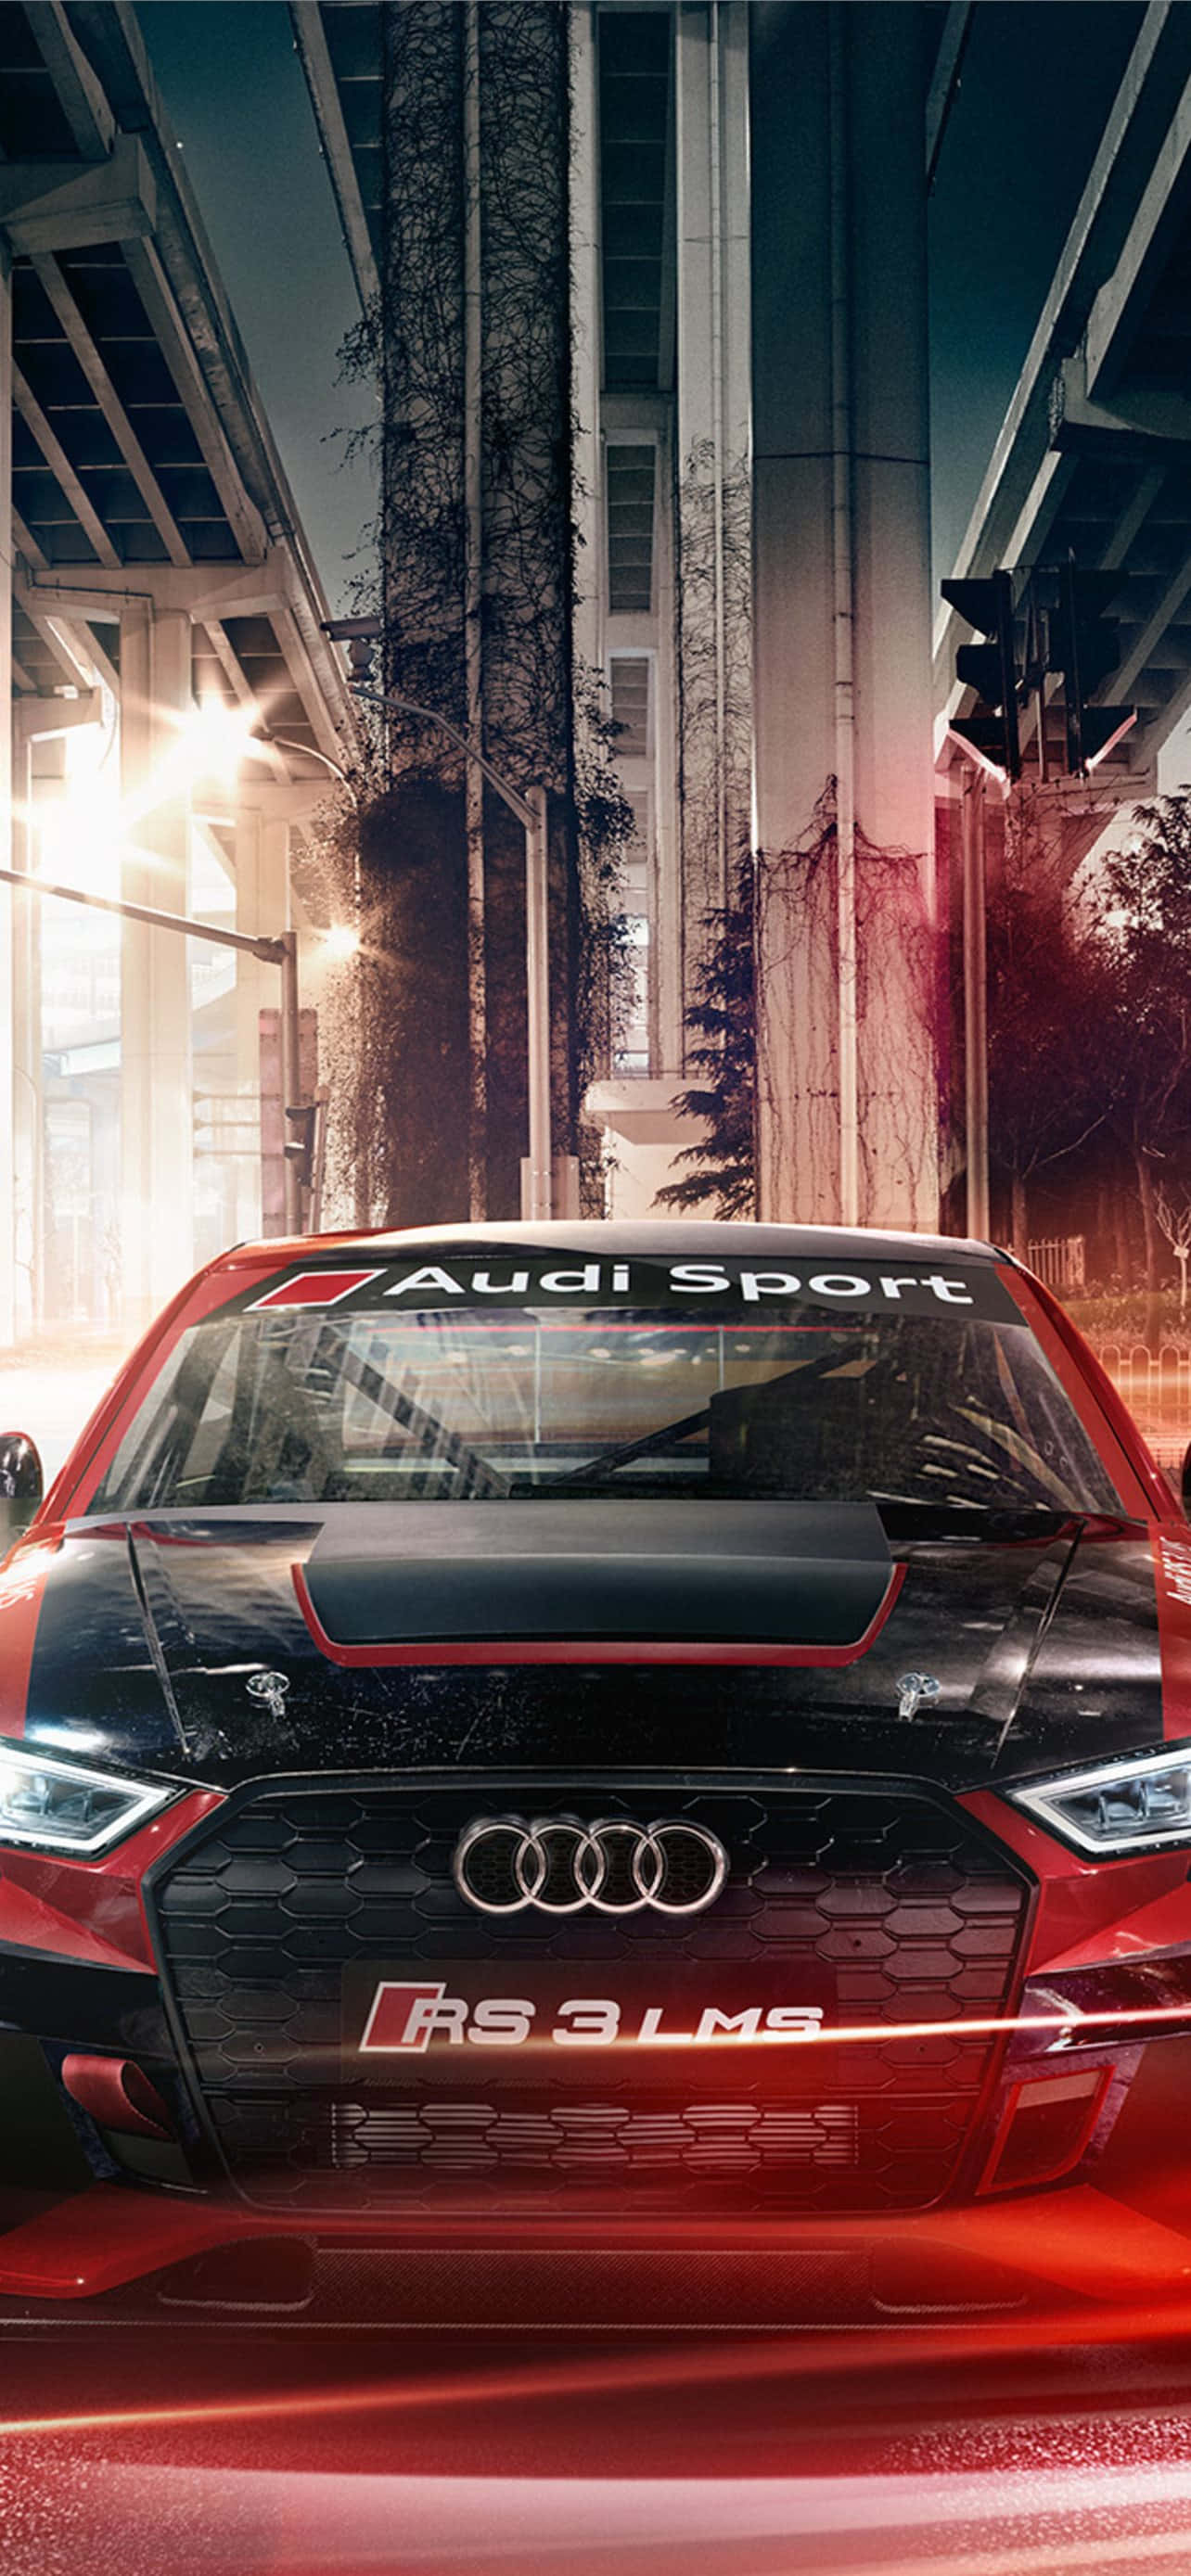 Audisportback Contro Un Paesaggio Urbano Notturno